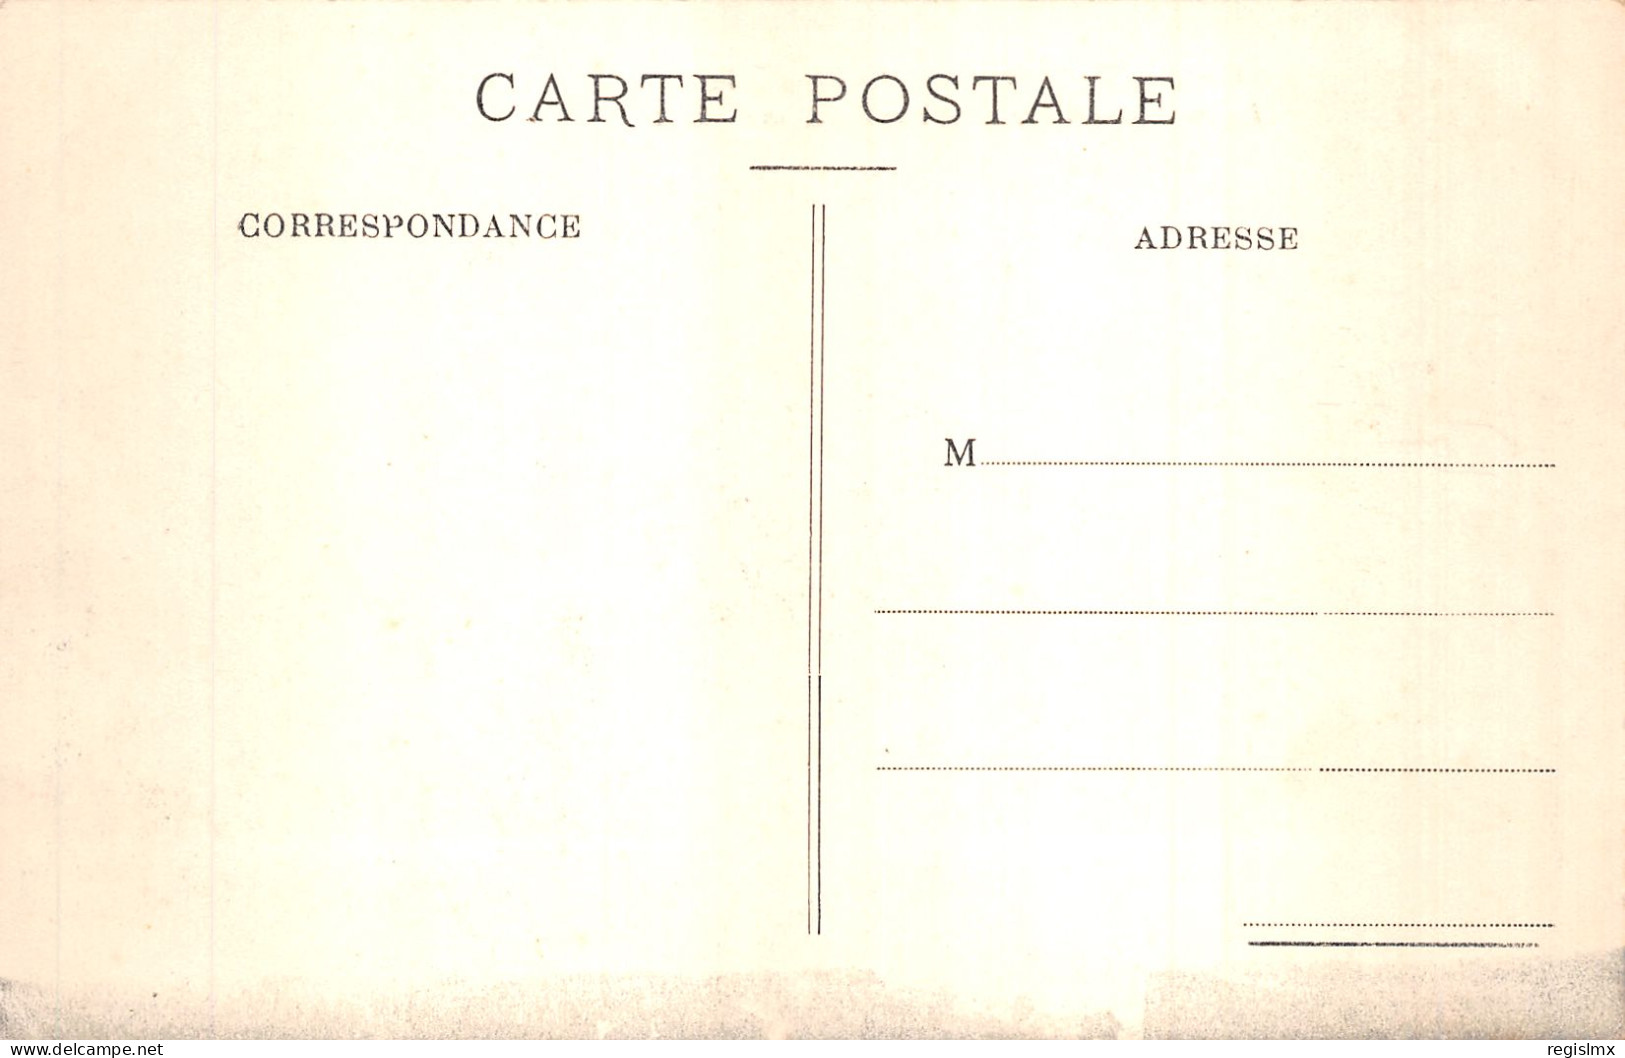 75-PARIS INNONDATIONS DE JANVIER 1910-N°T1044-A/0301 - Überschwemmung 1910